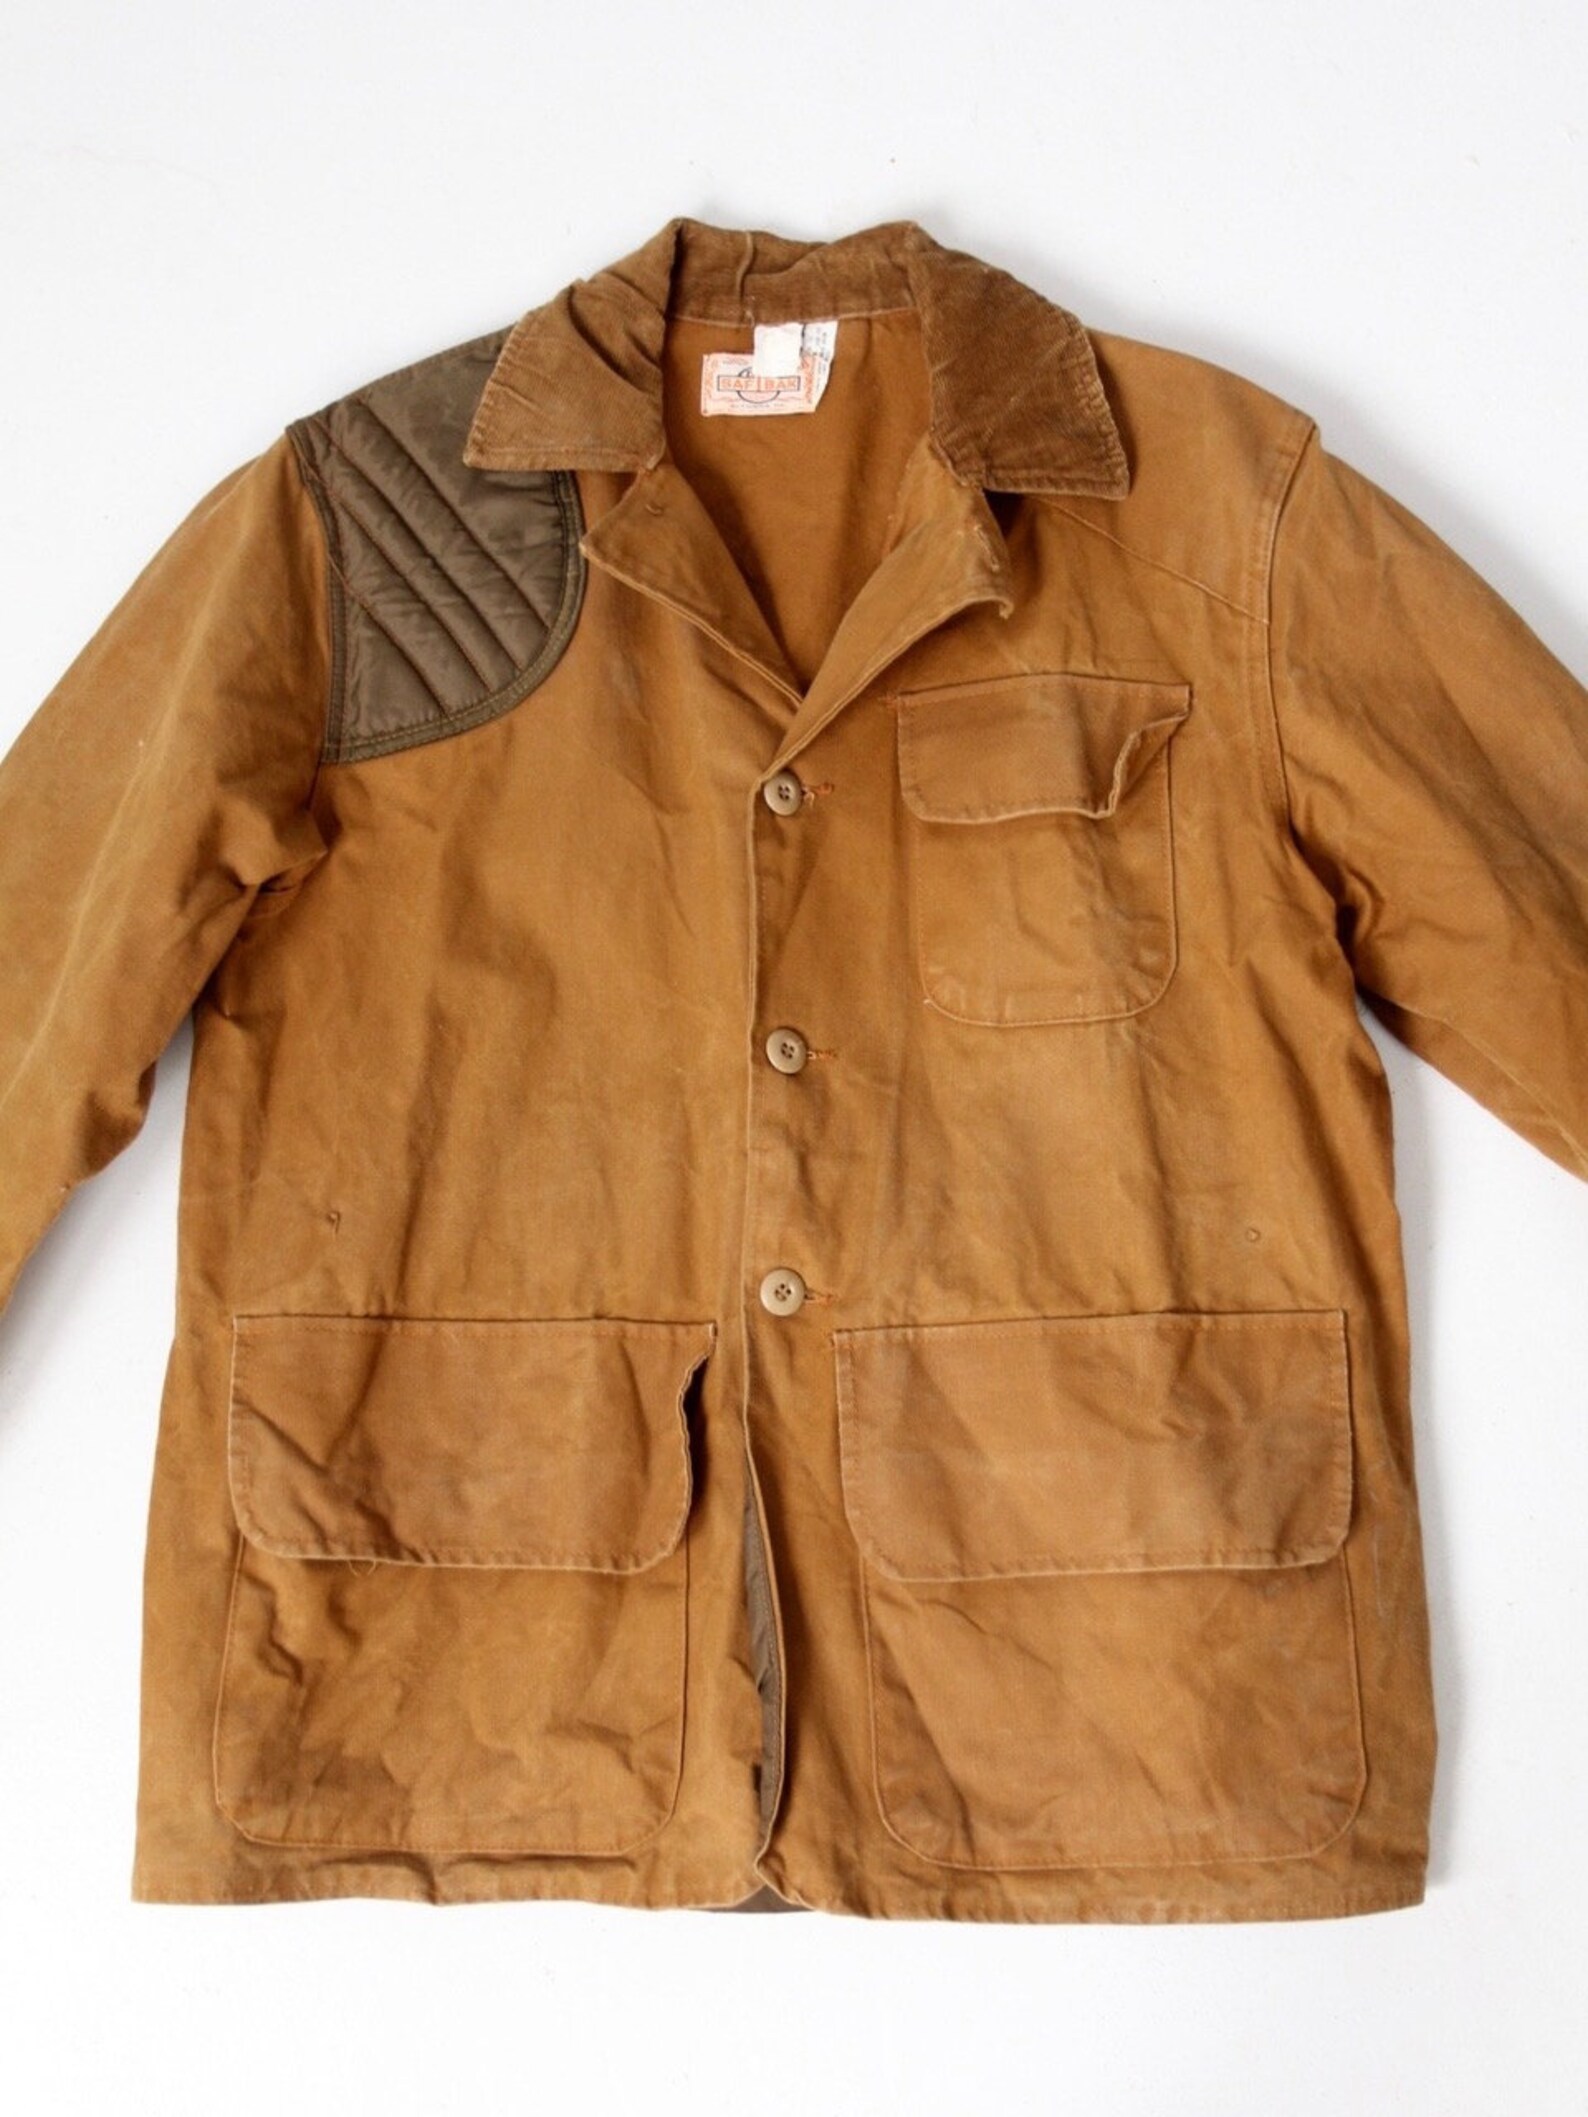 Vintage Hunting Jacket by Saftbak - Etsy